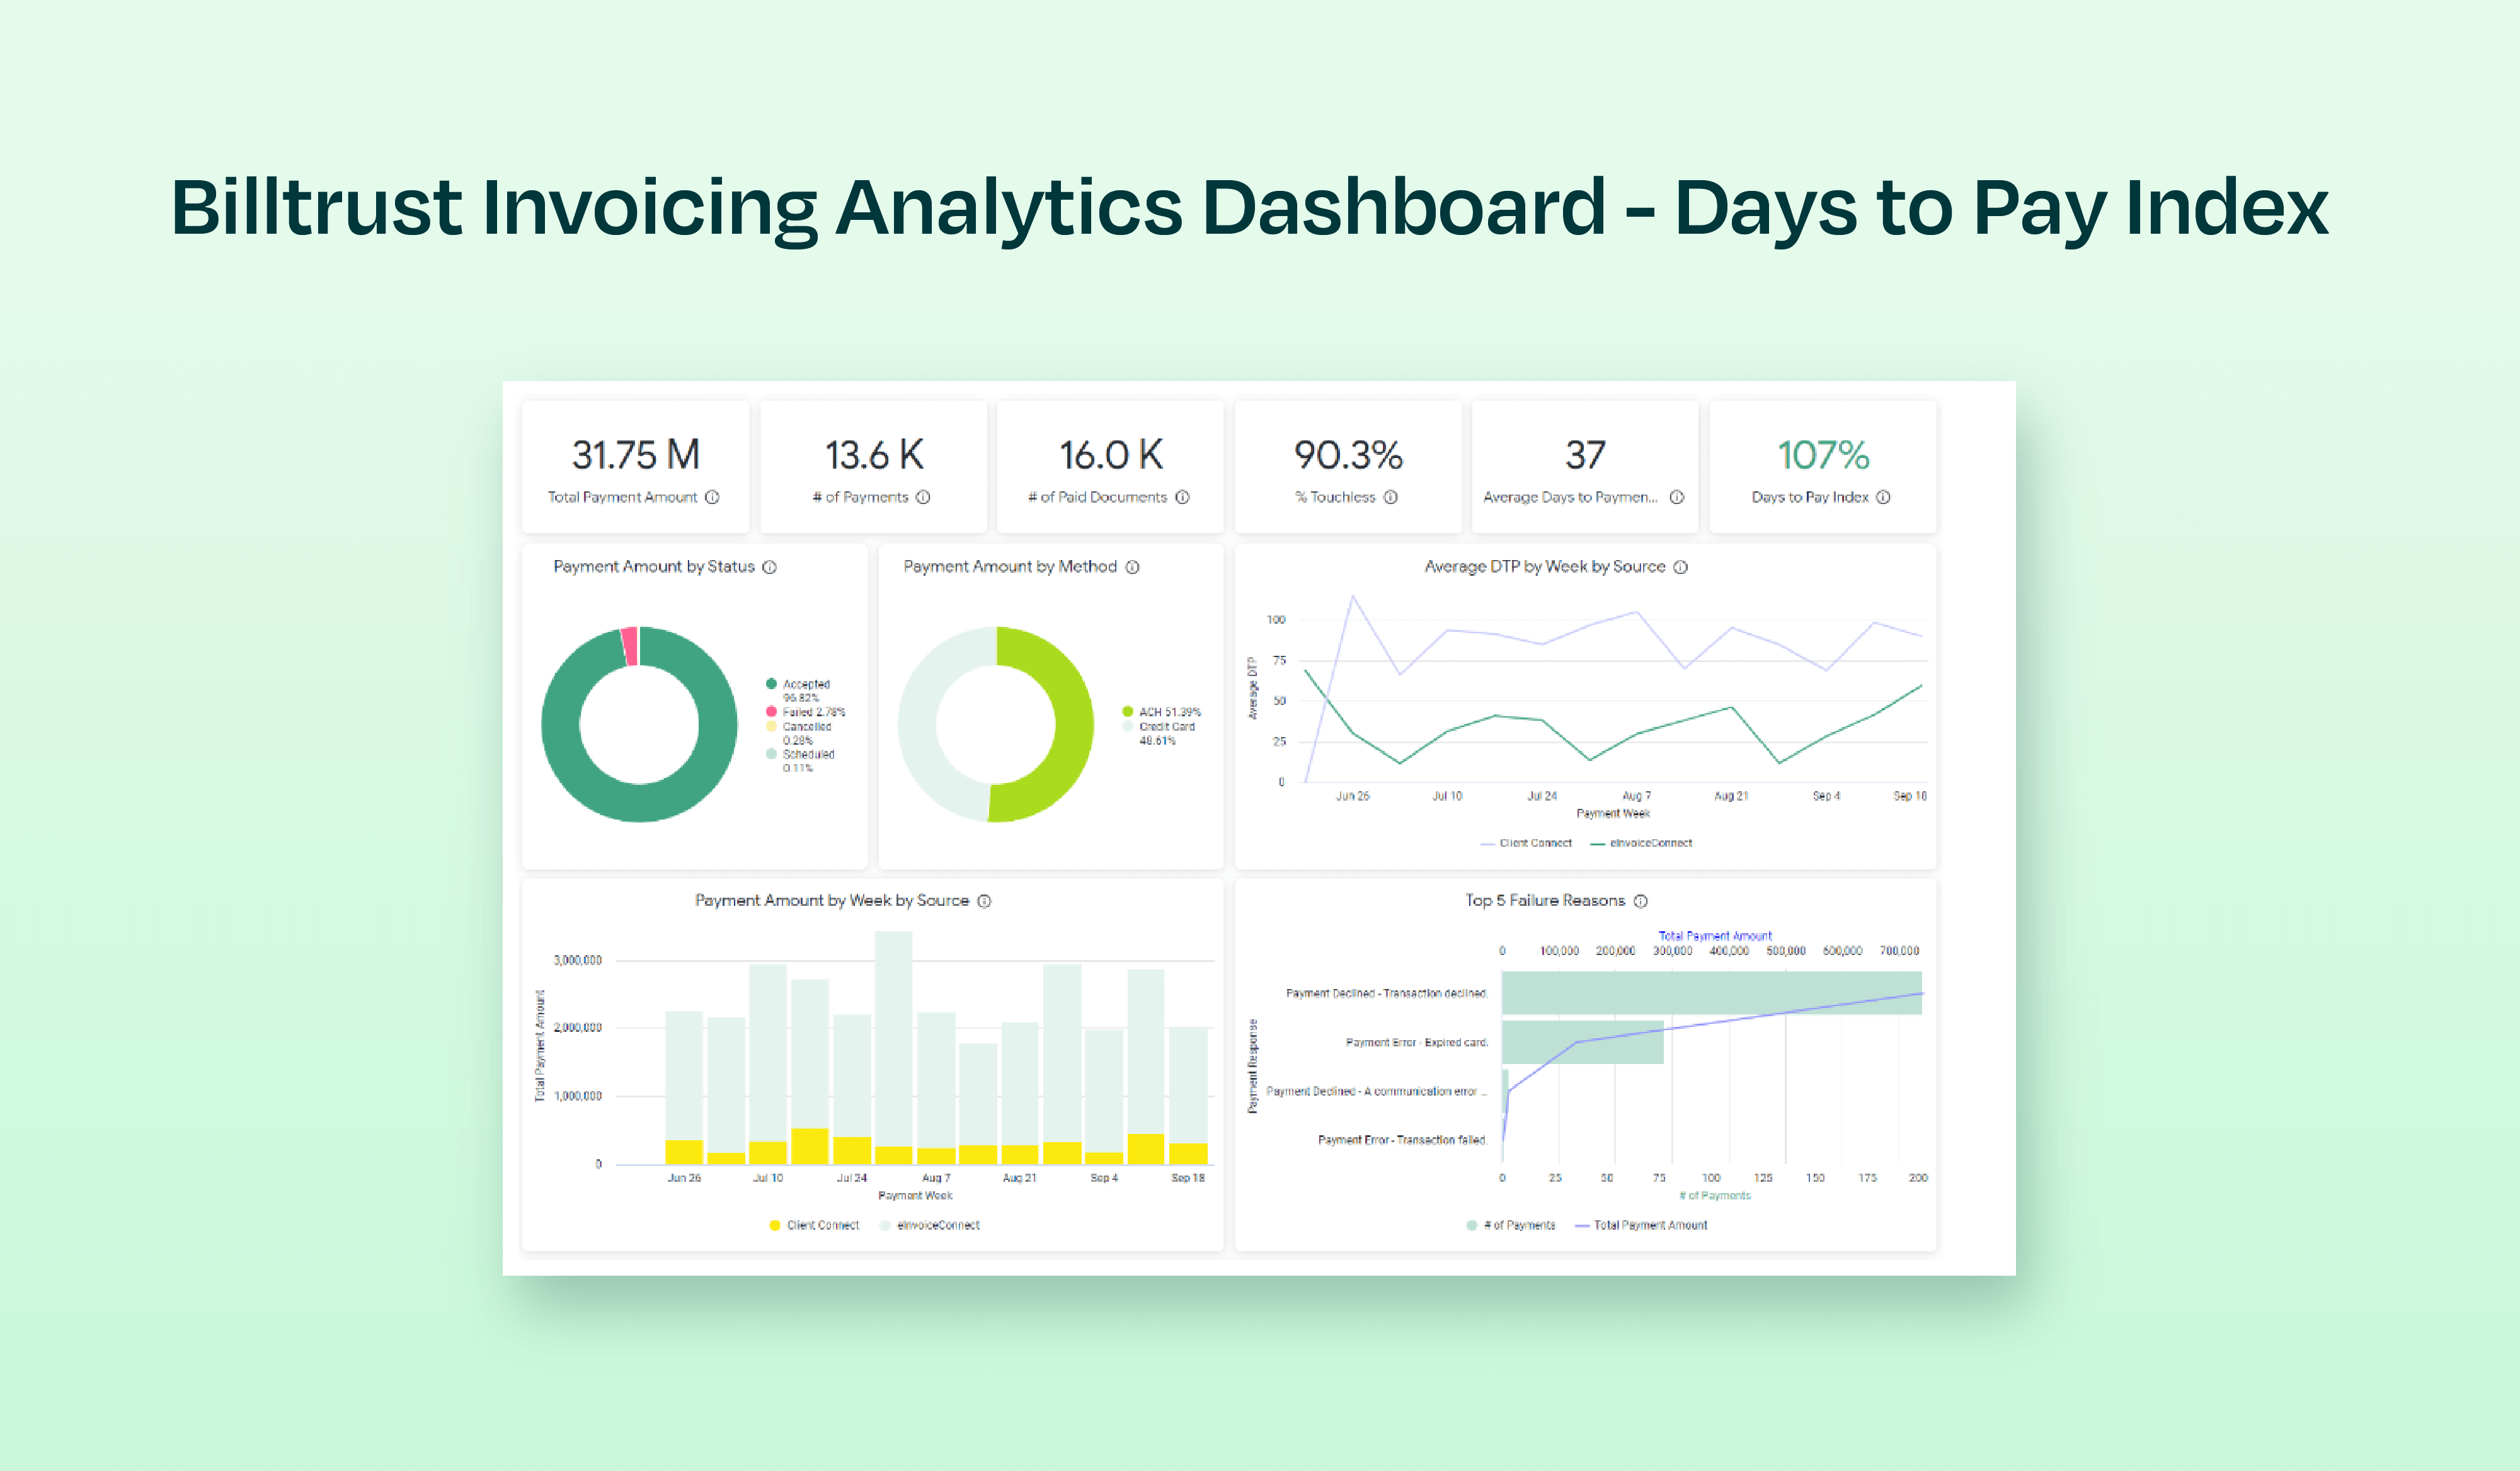 days to pay index from billtrust's invoicing analytics dashboard